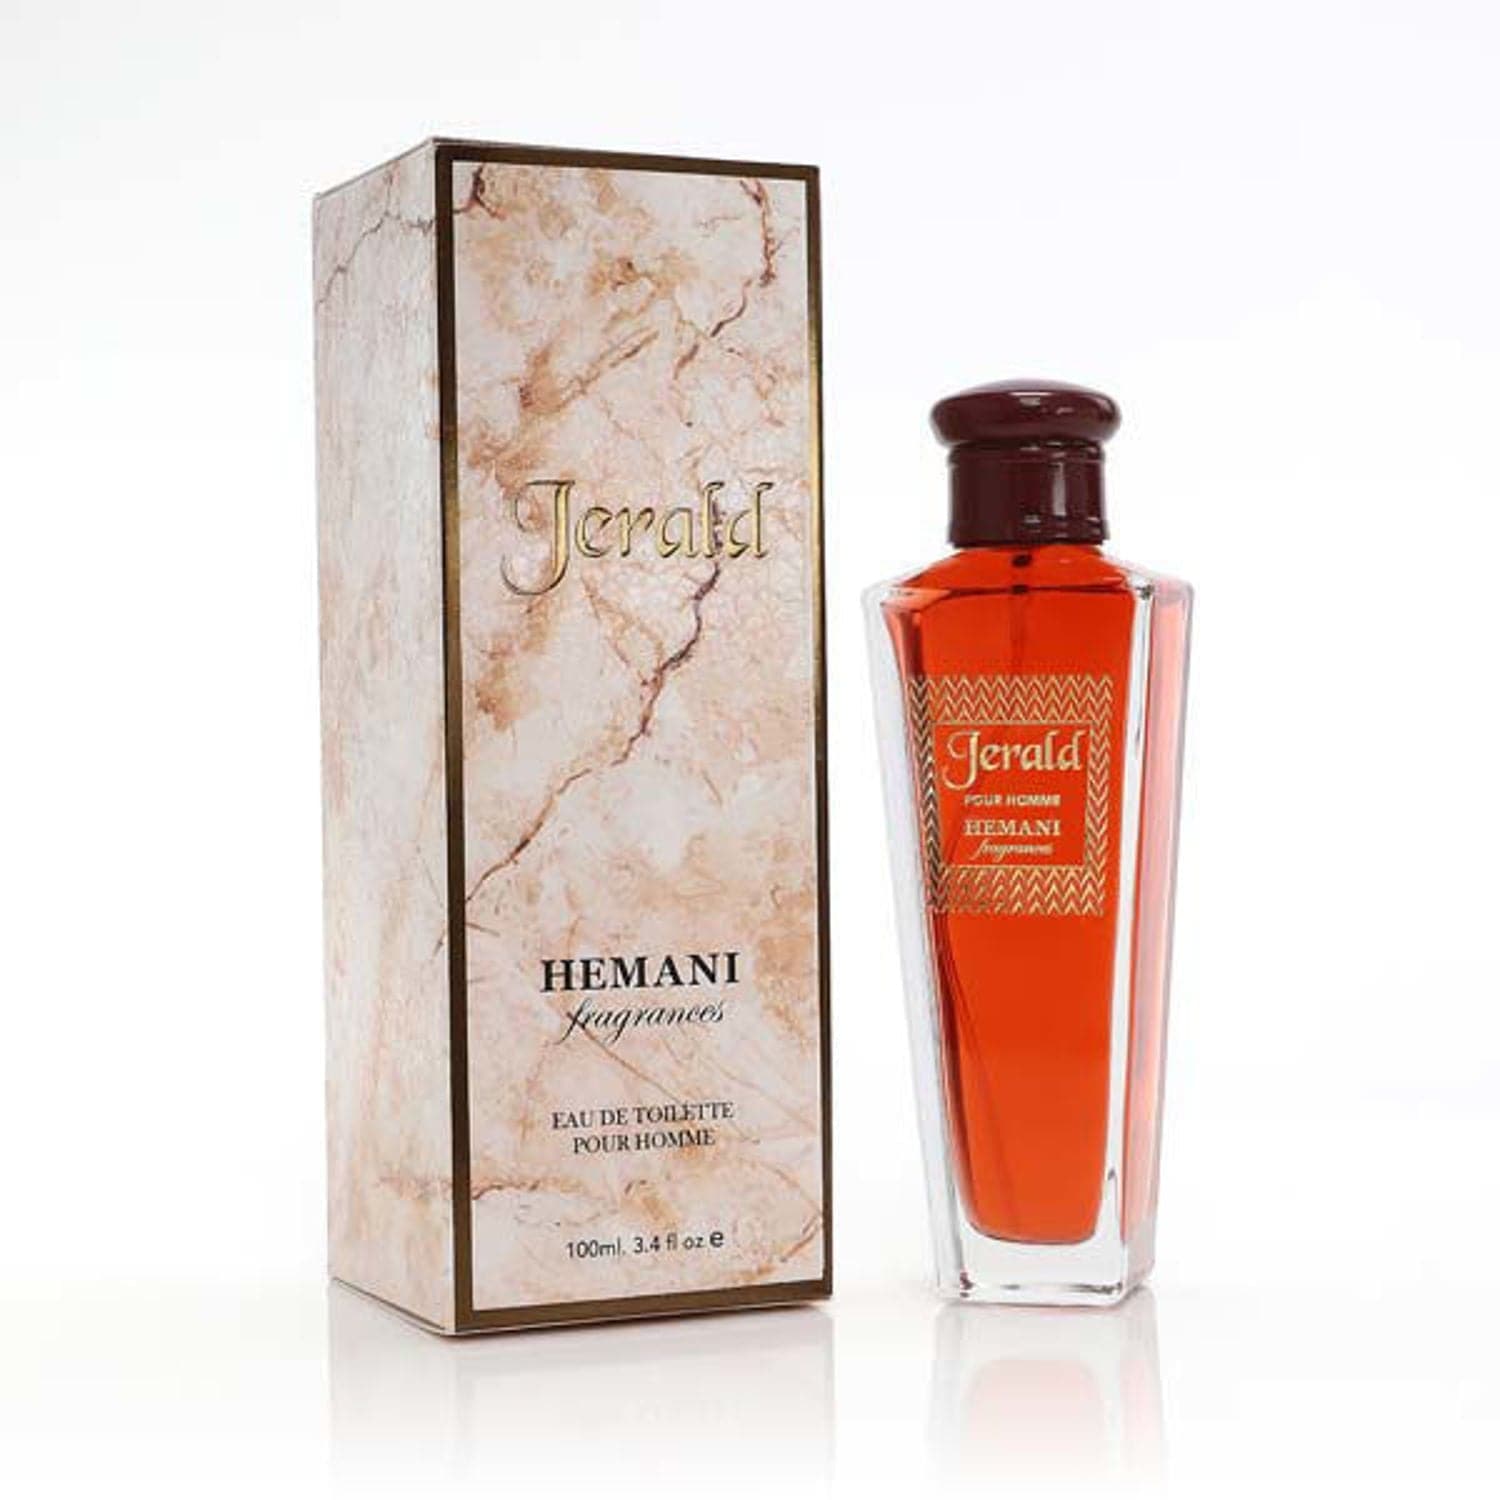 Hemani Jerald Edt Perfume – Men - Premium  from Hemani - Just Rs 1350.00! Shop now at Cozmetica